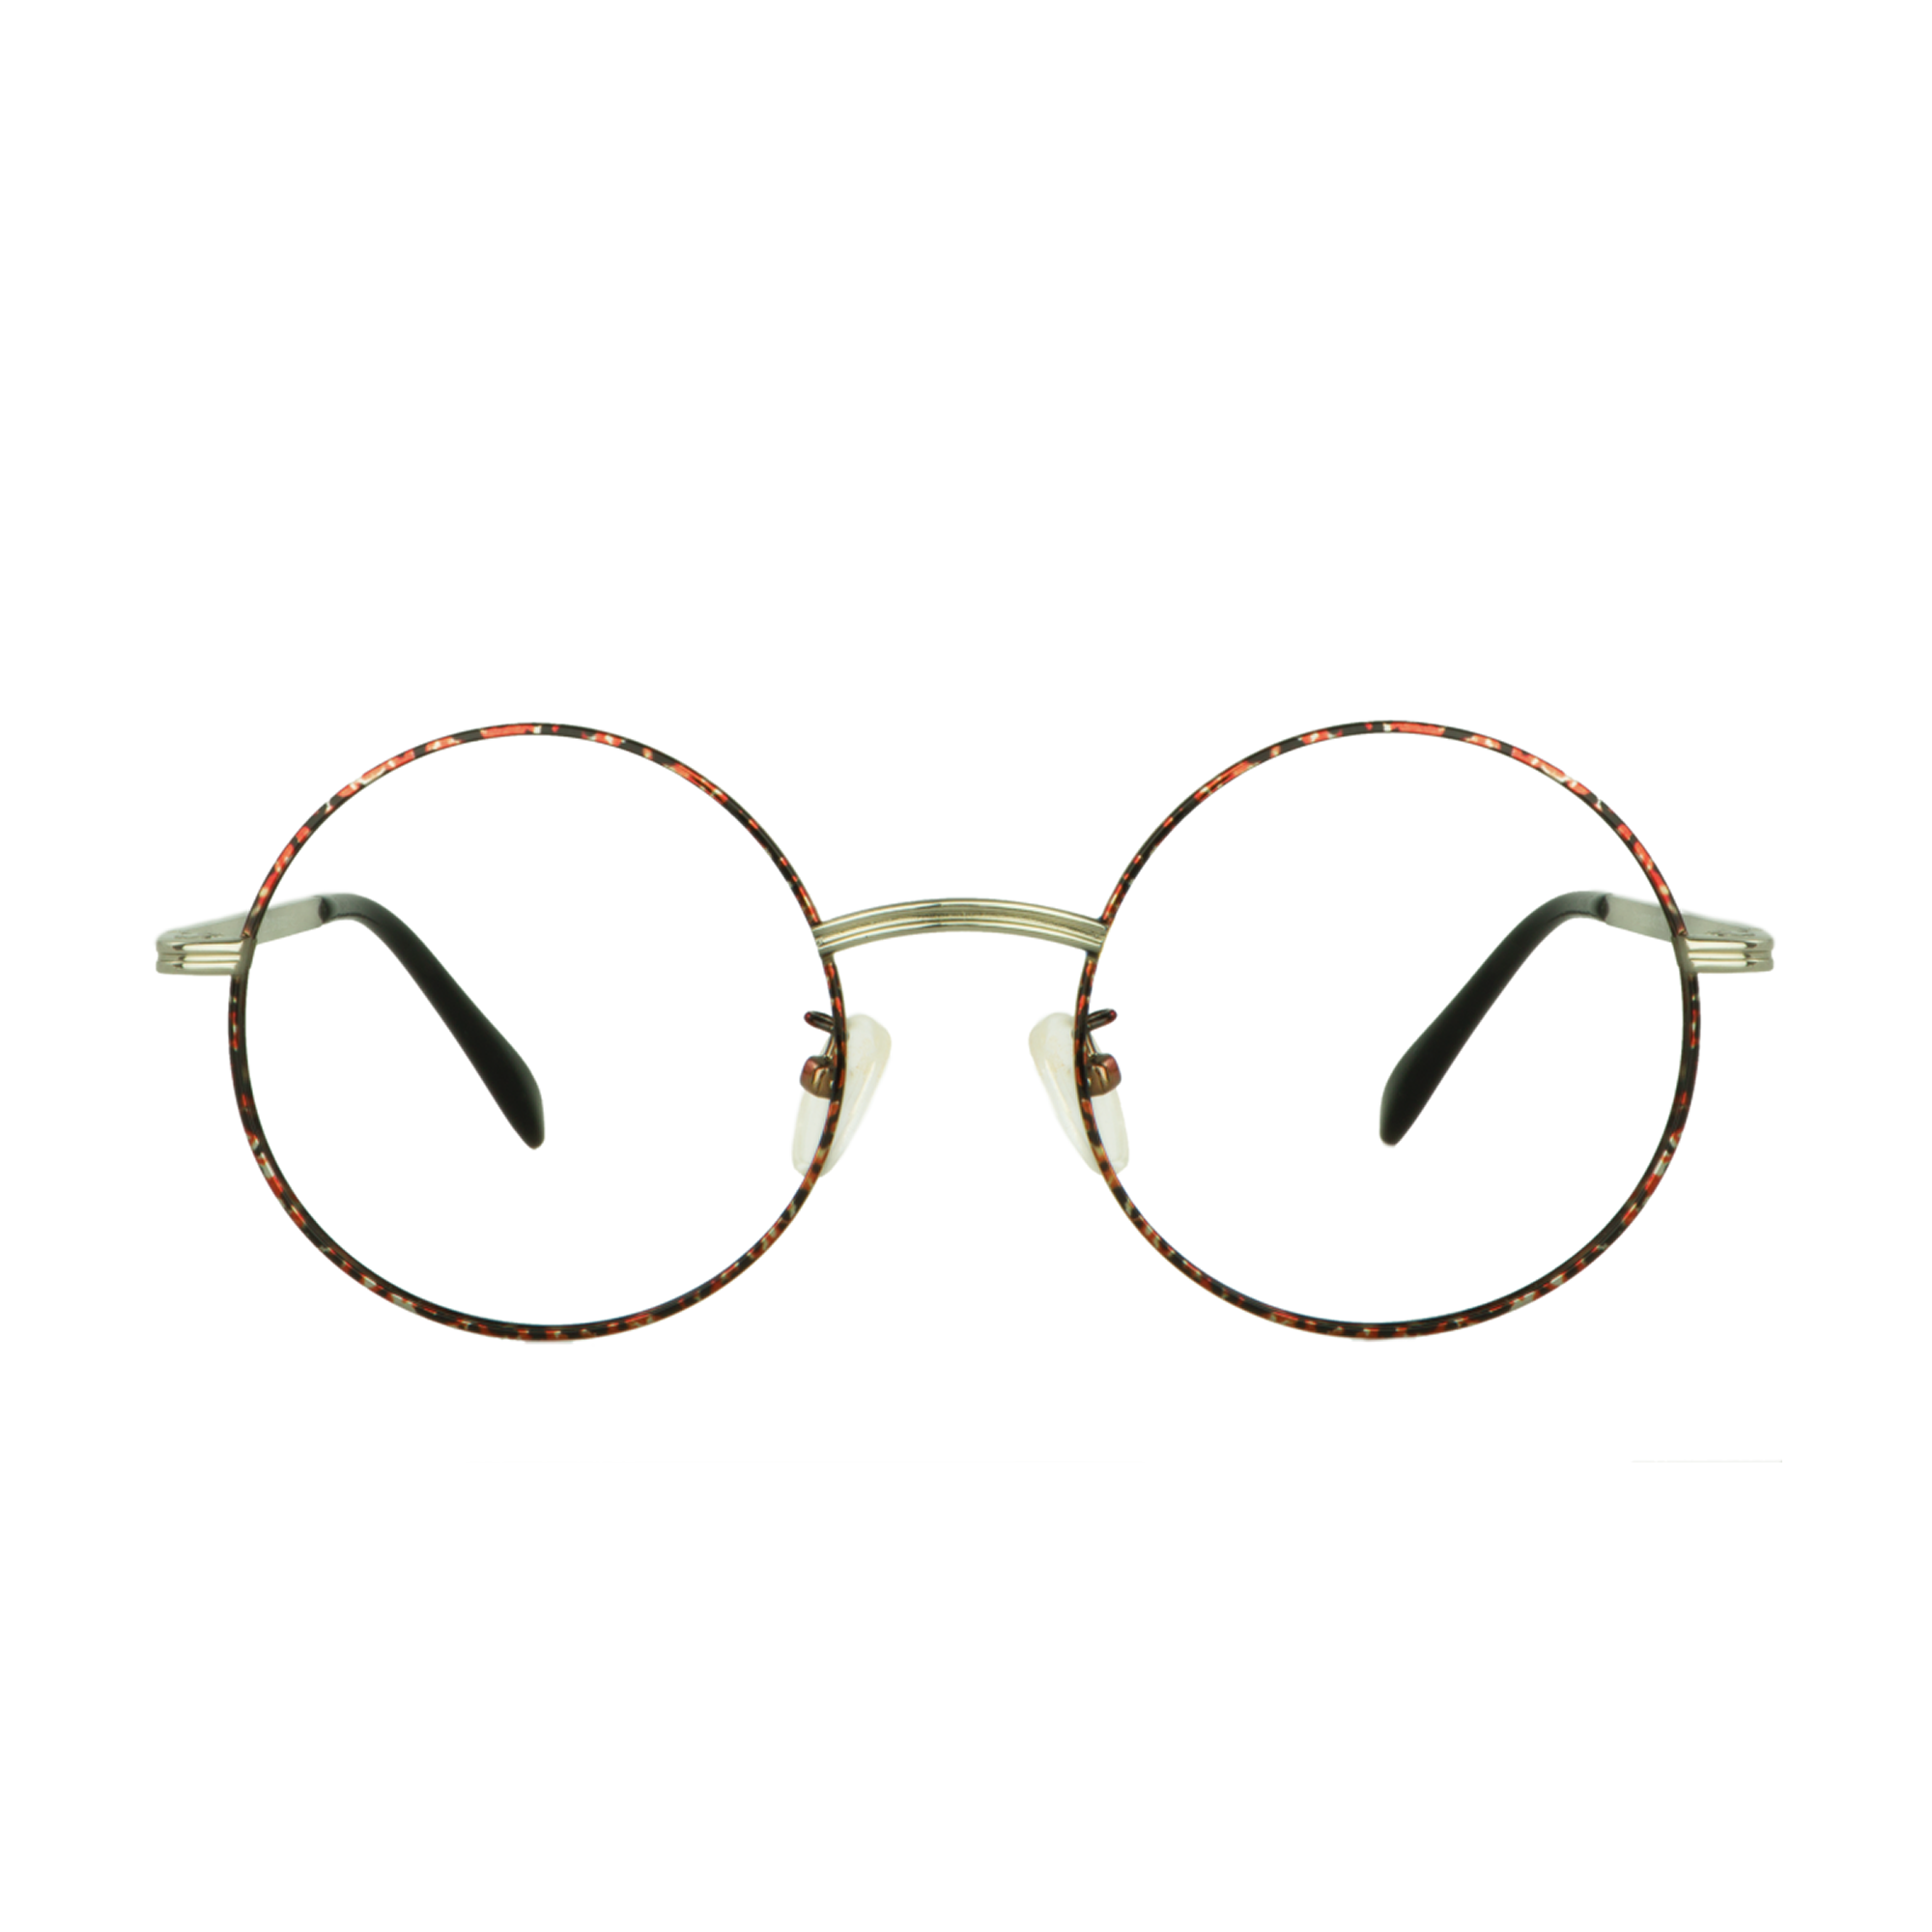 Sample Glasses 6